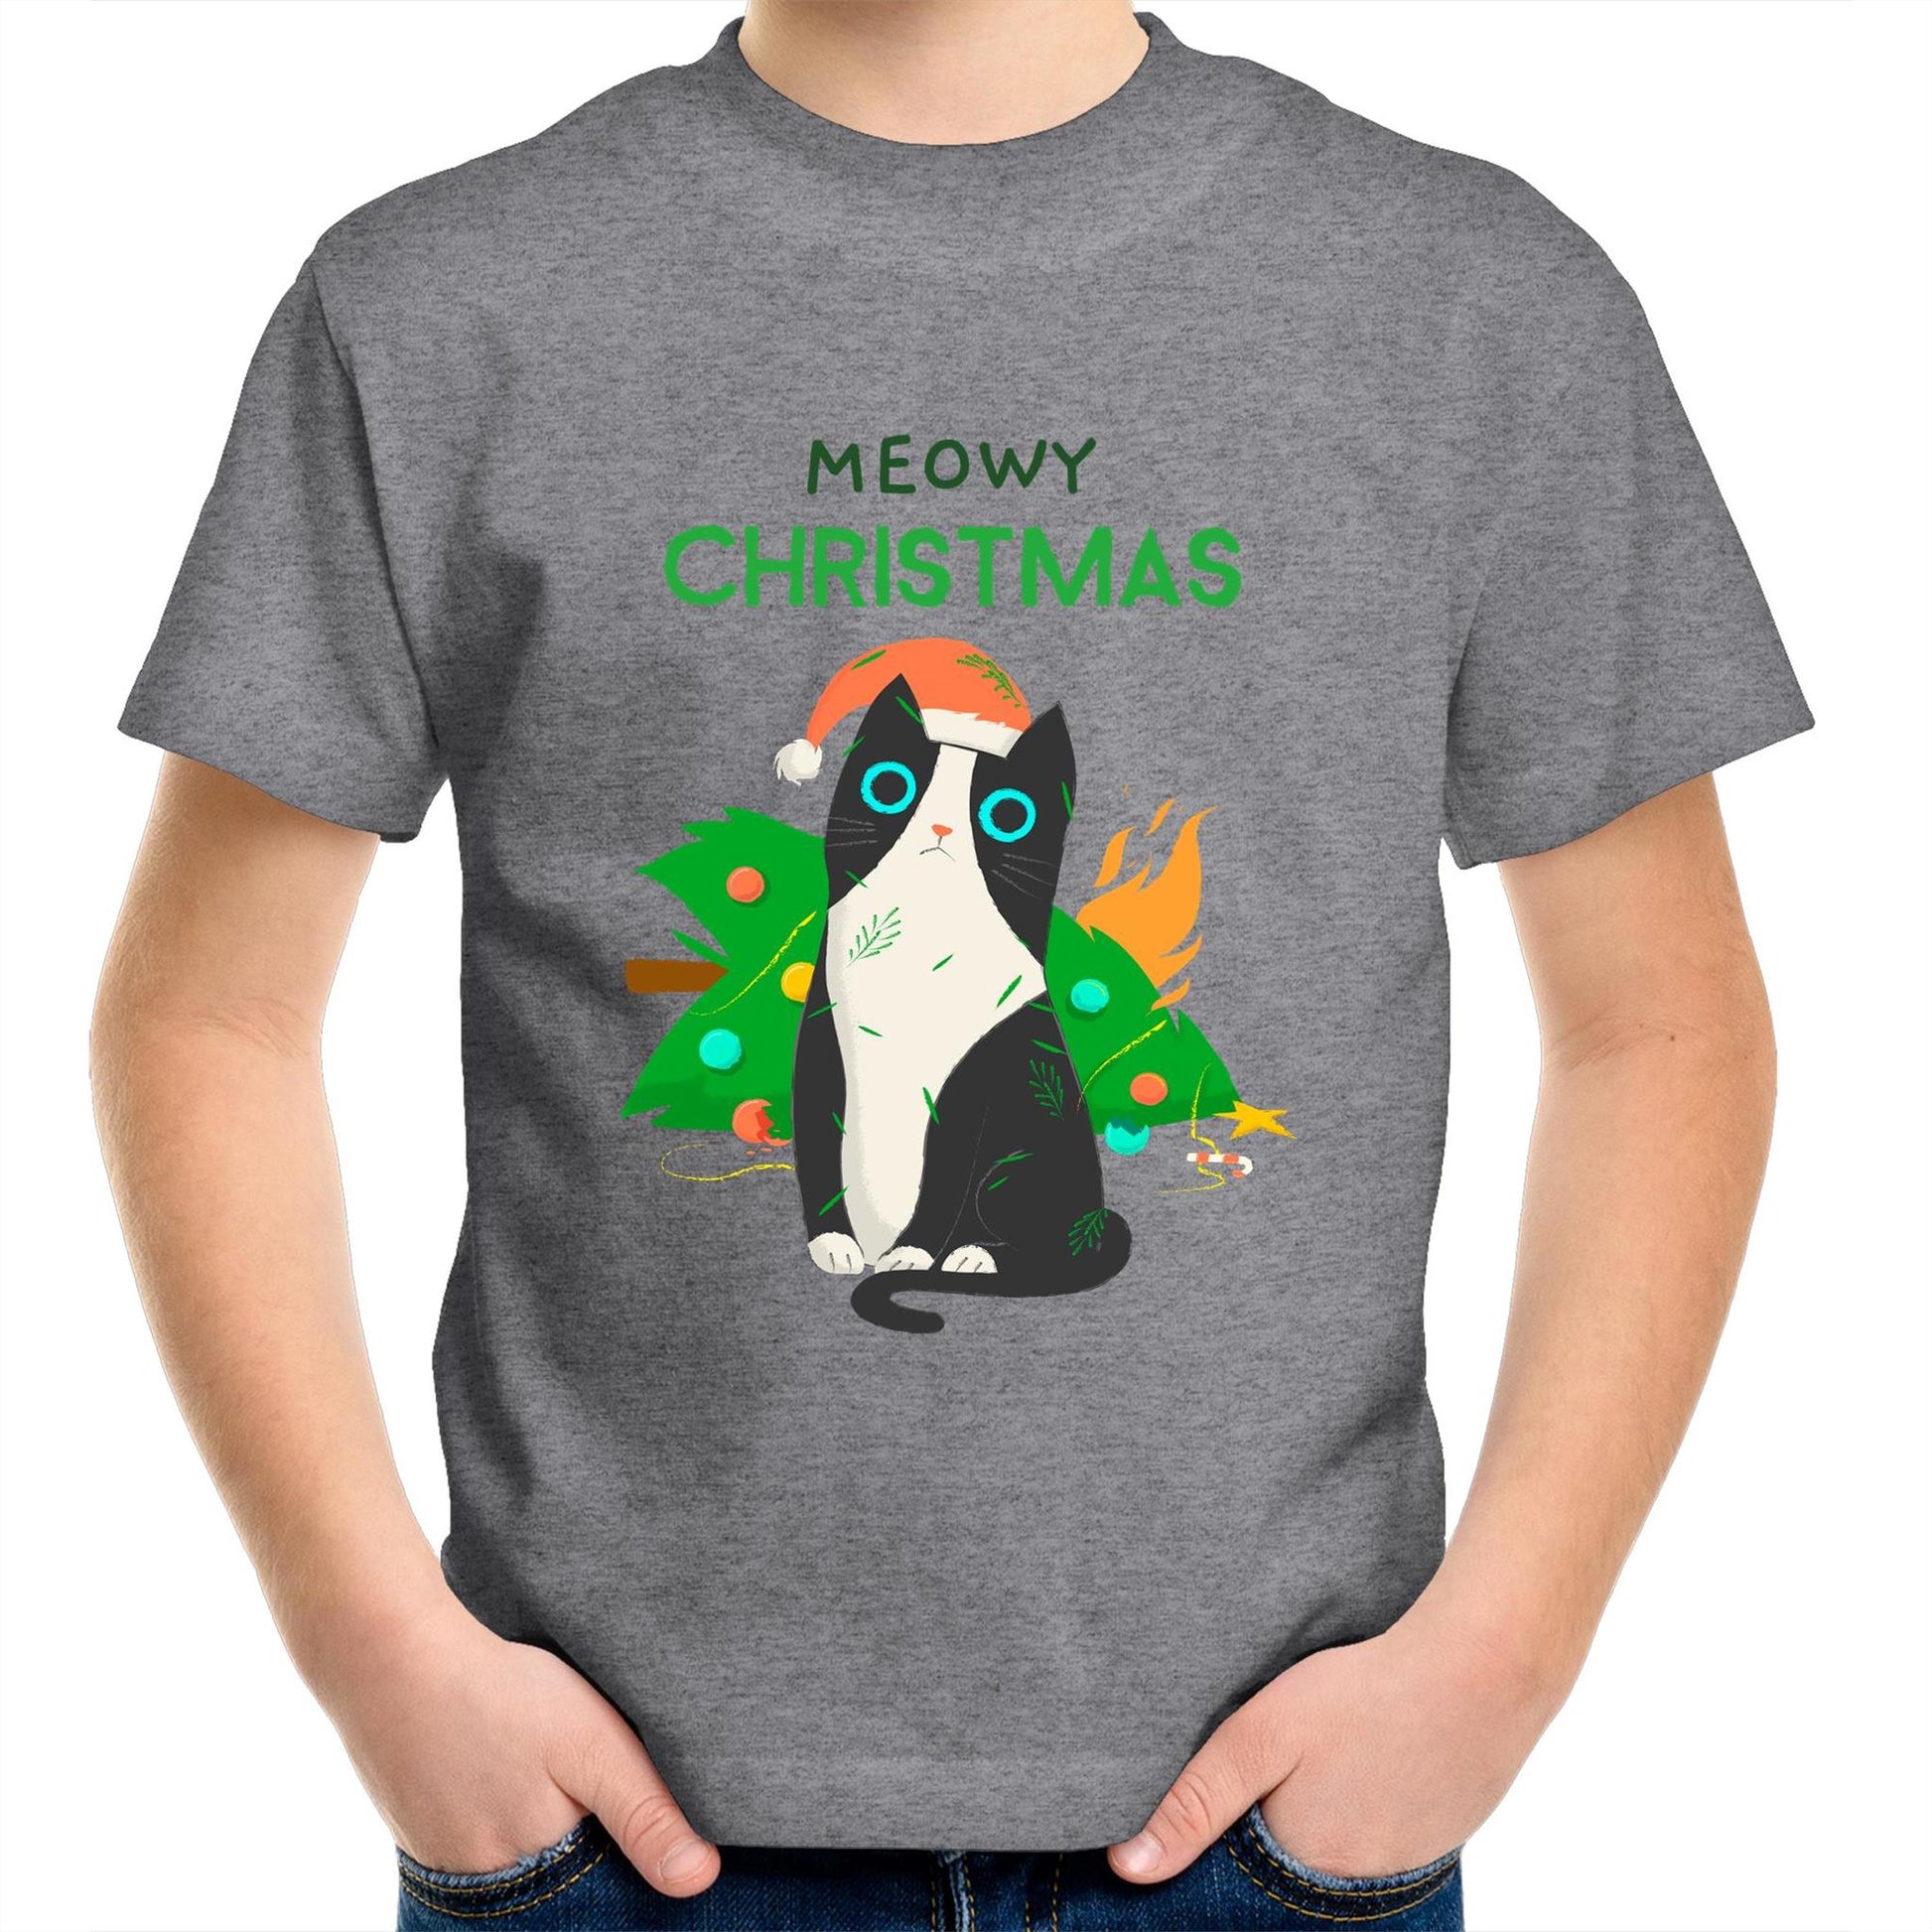 Meowy Christmas - Kids Youth Crew T-Shirt Grey Marle Christmas Kids T-shirt Merry Christmas